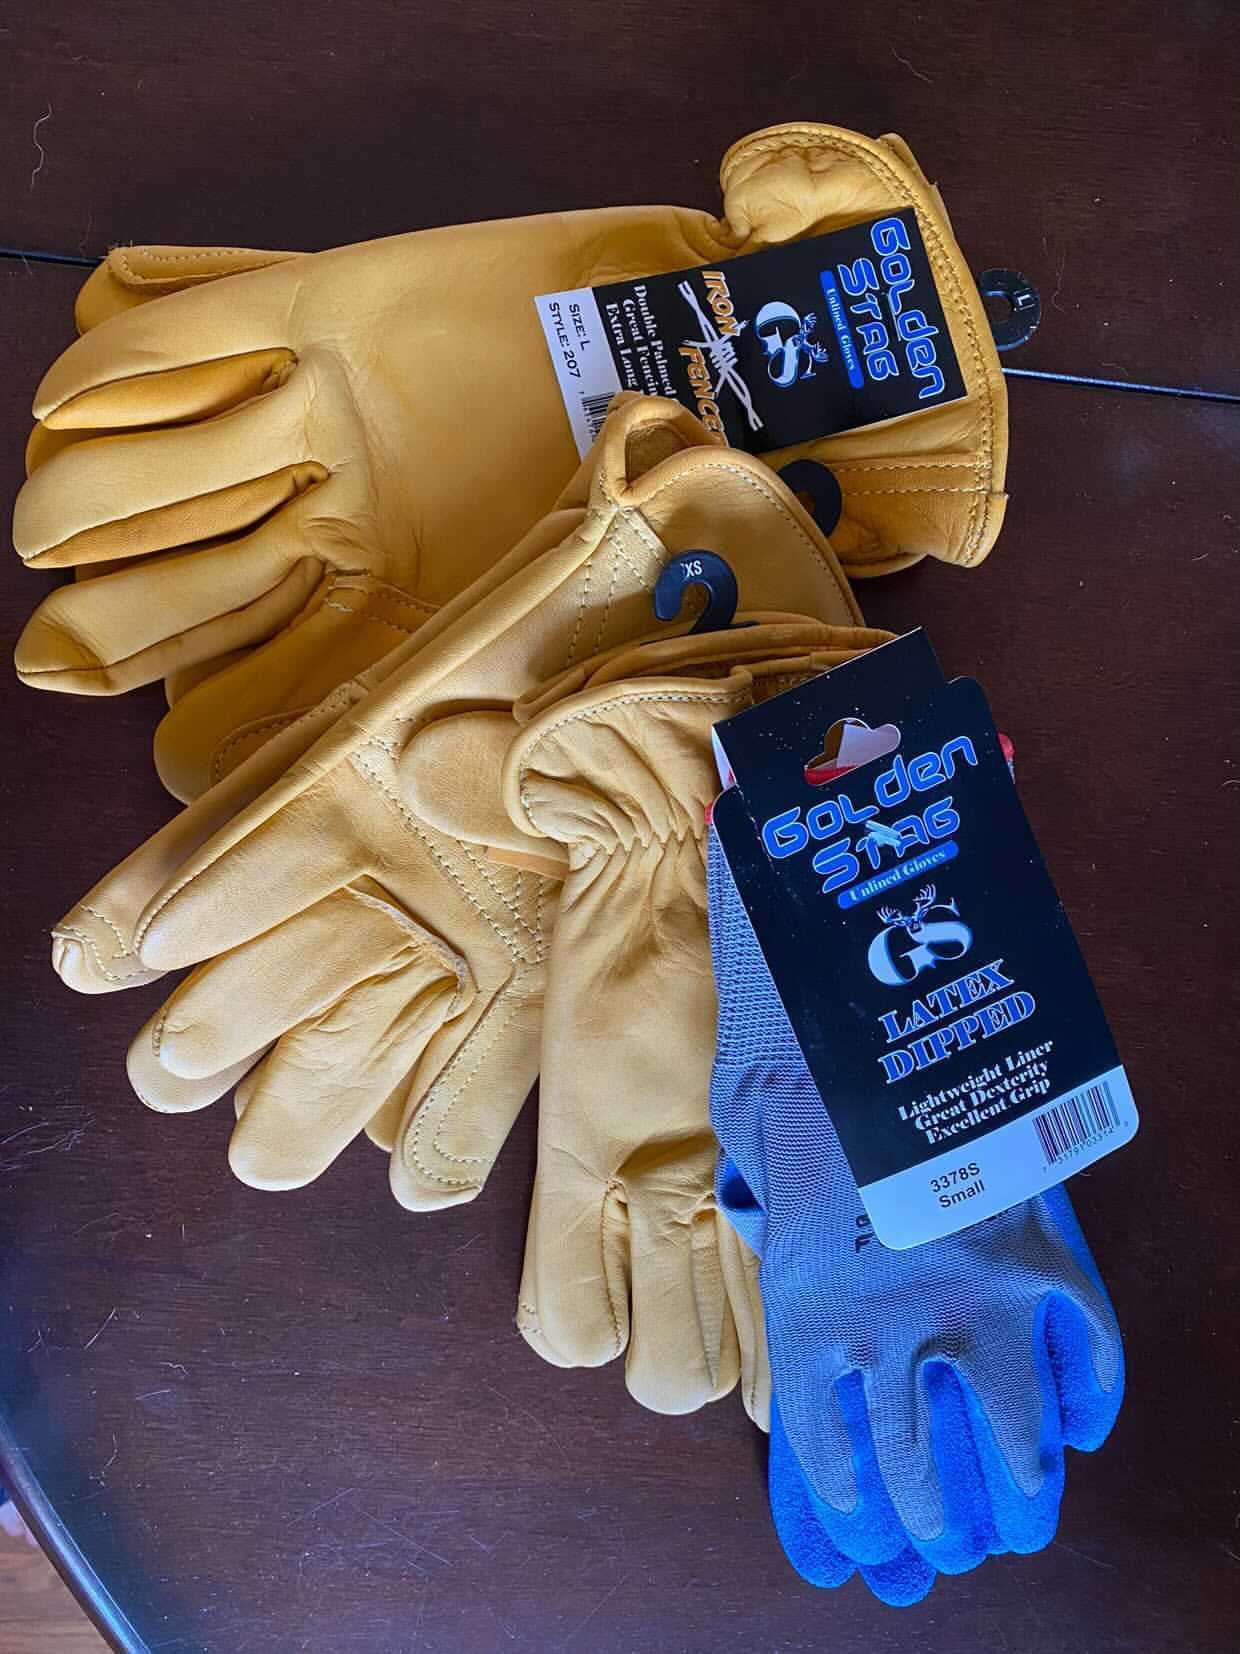 Iron Fencer Work Glove 207 Cowhide Leather Golden Stag Gloves